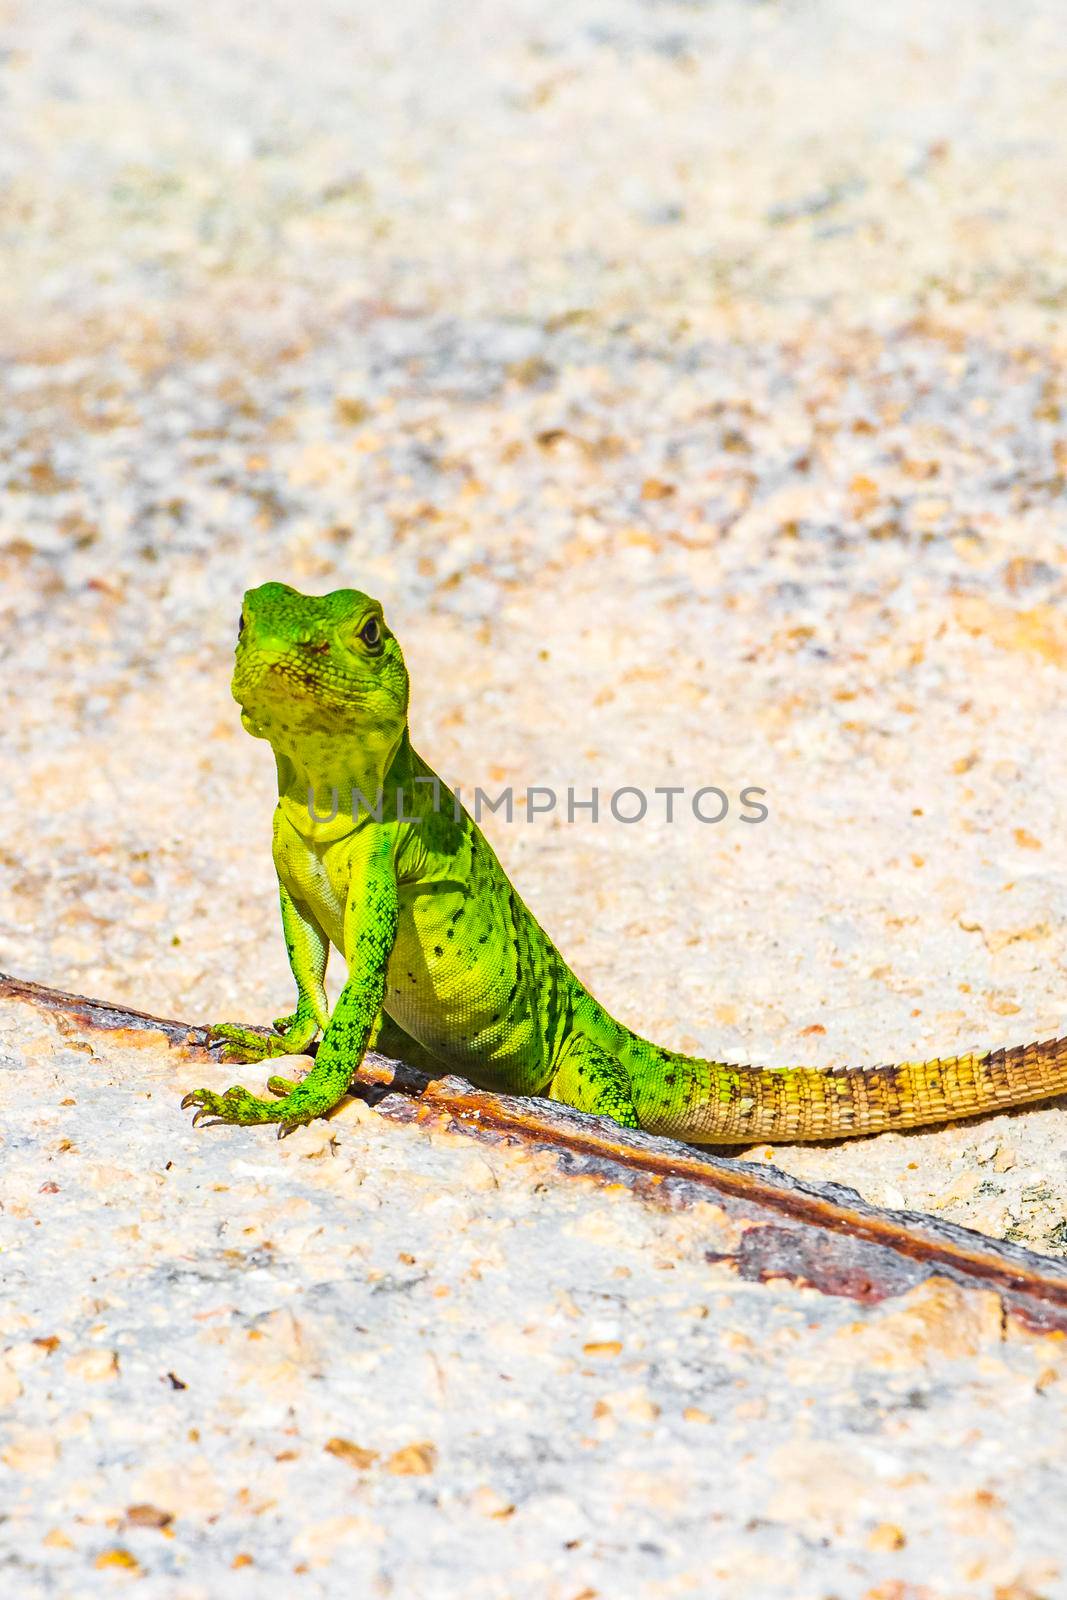 Caribbean green lizard on the ground Playa del Carmen Mexico. by Arkadij